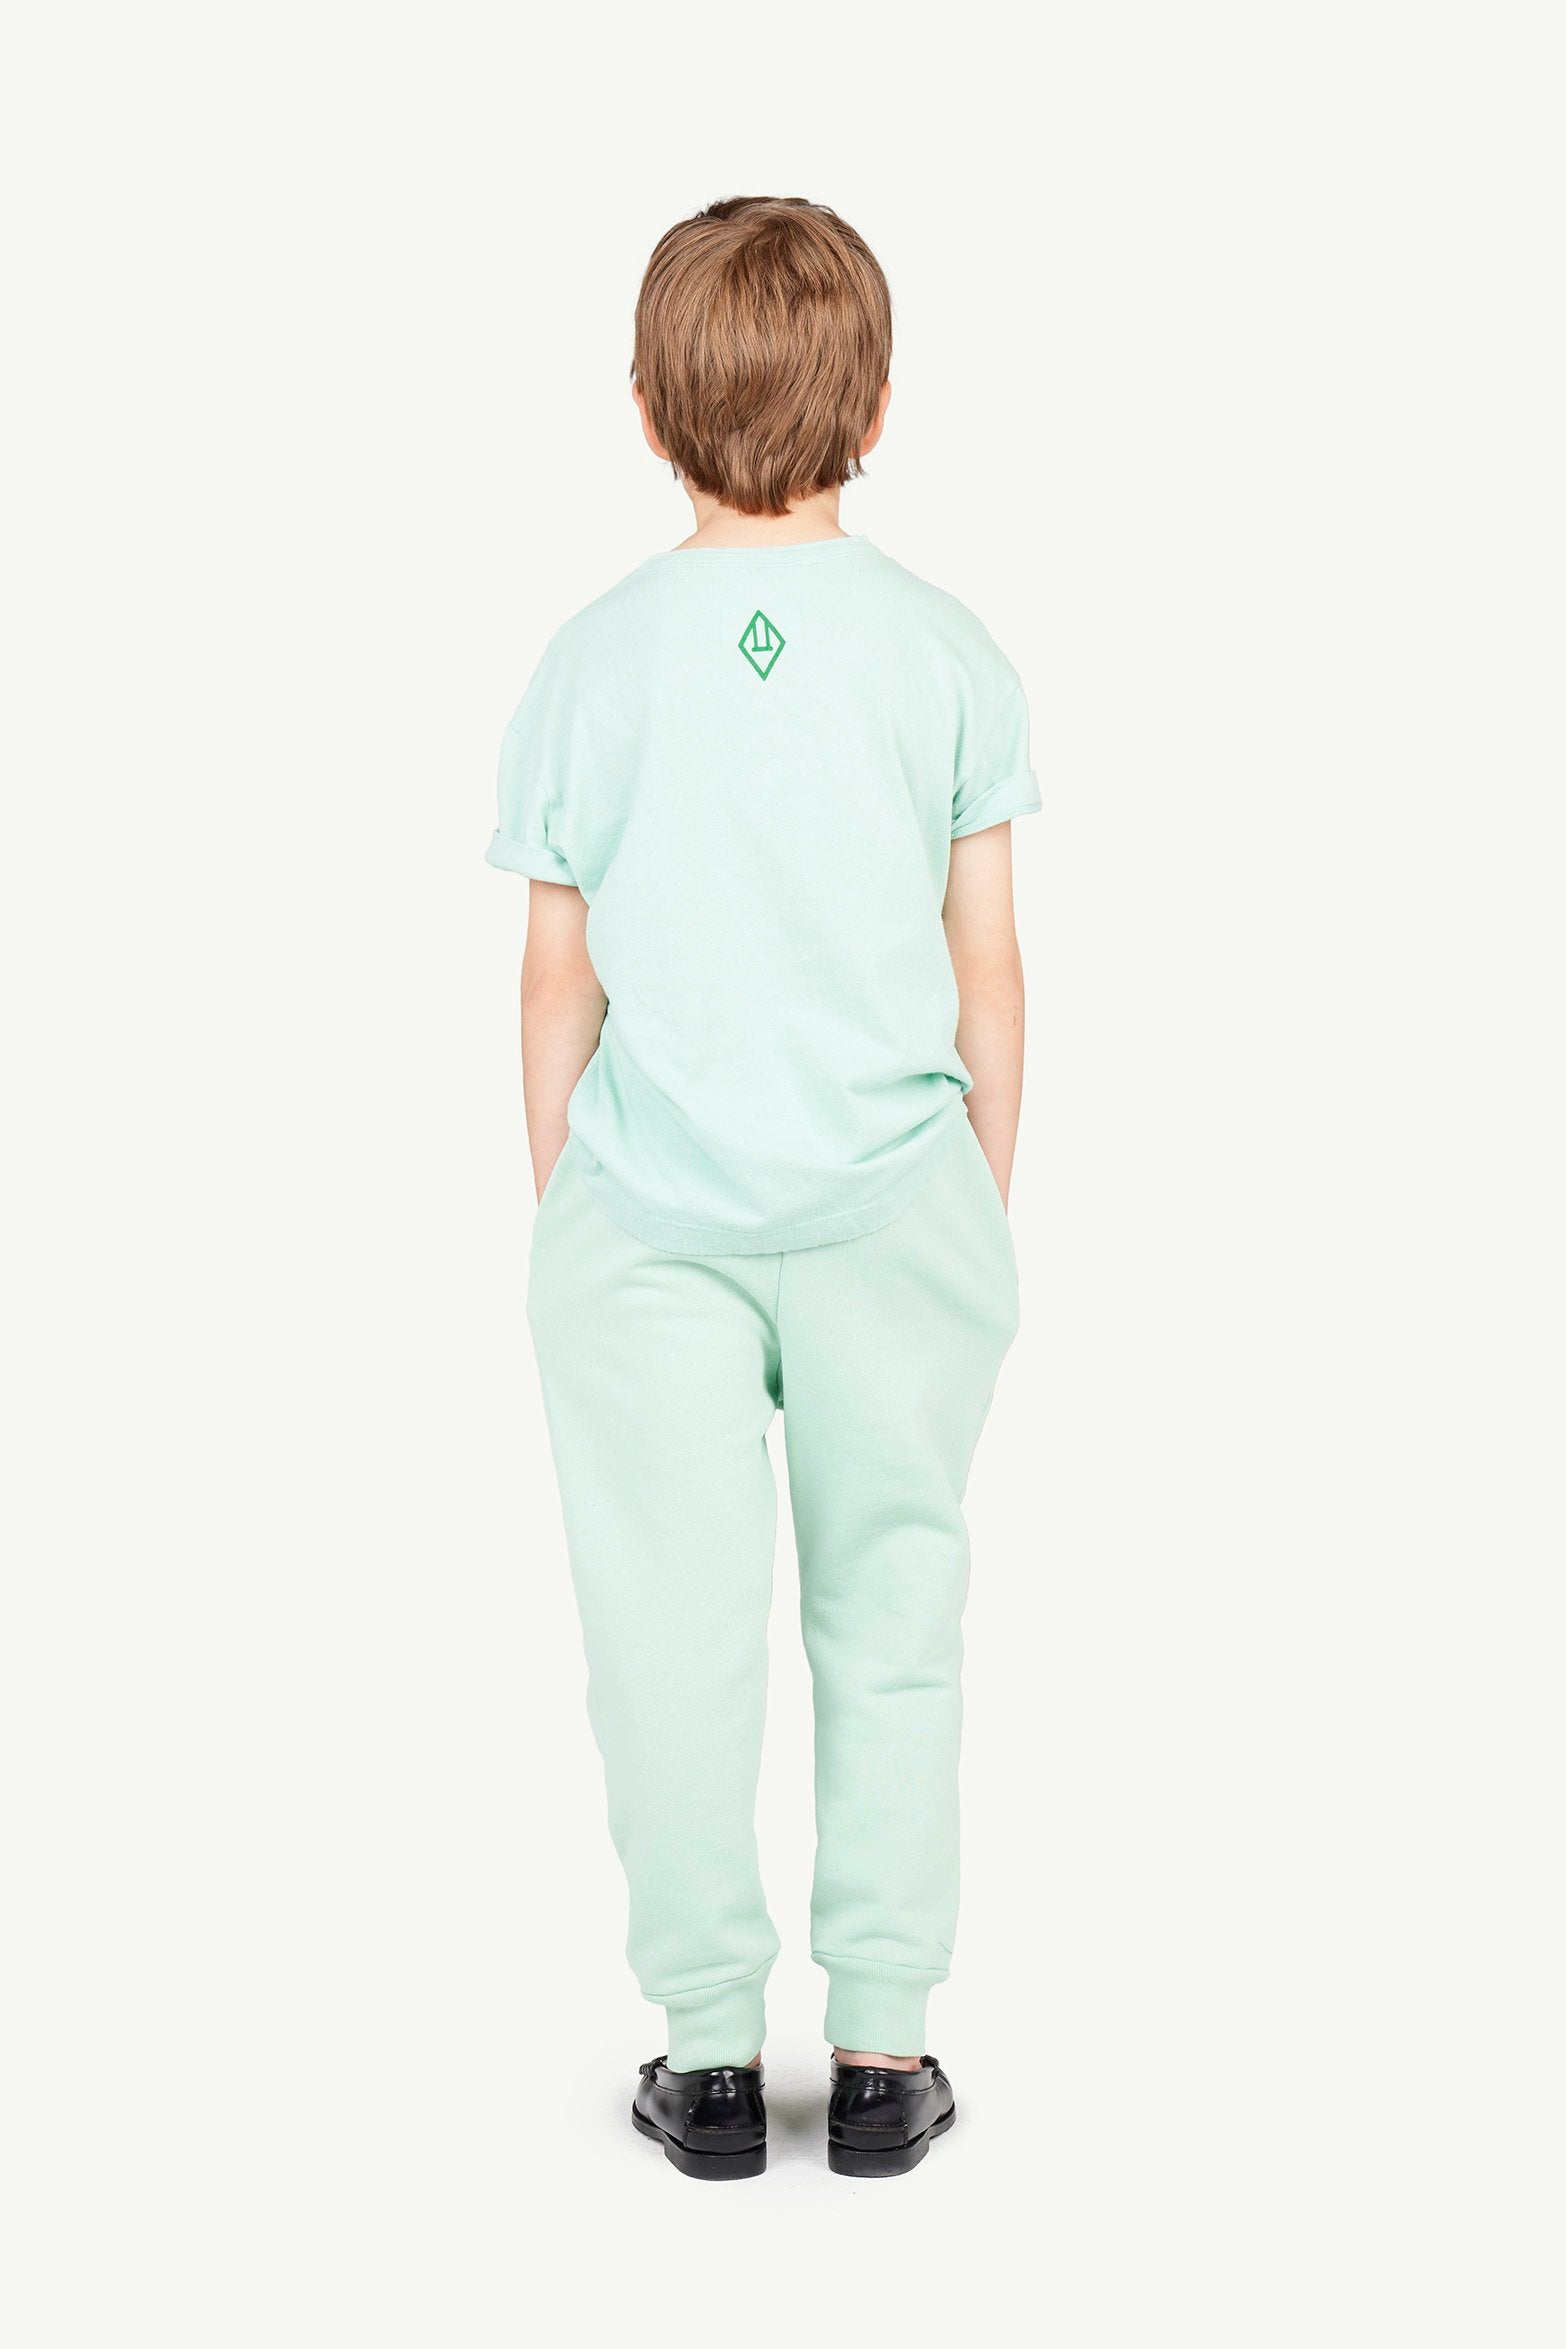 Turquoise Orion Kids T-Shirt MODEL BACK